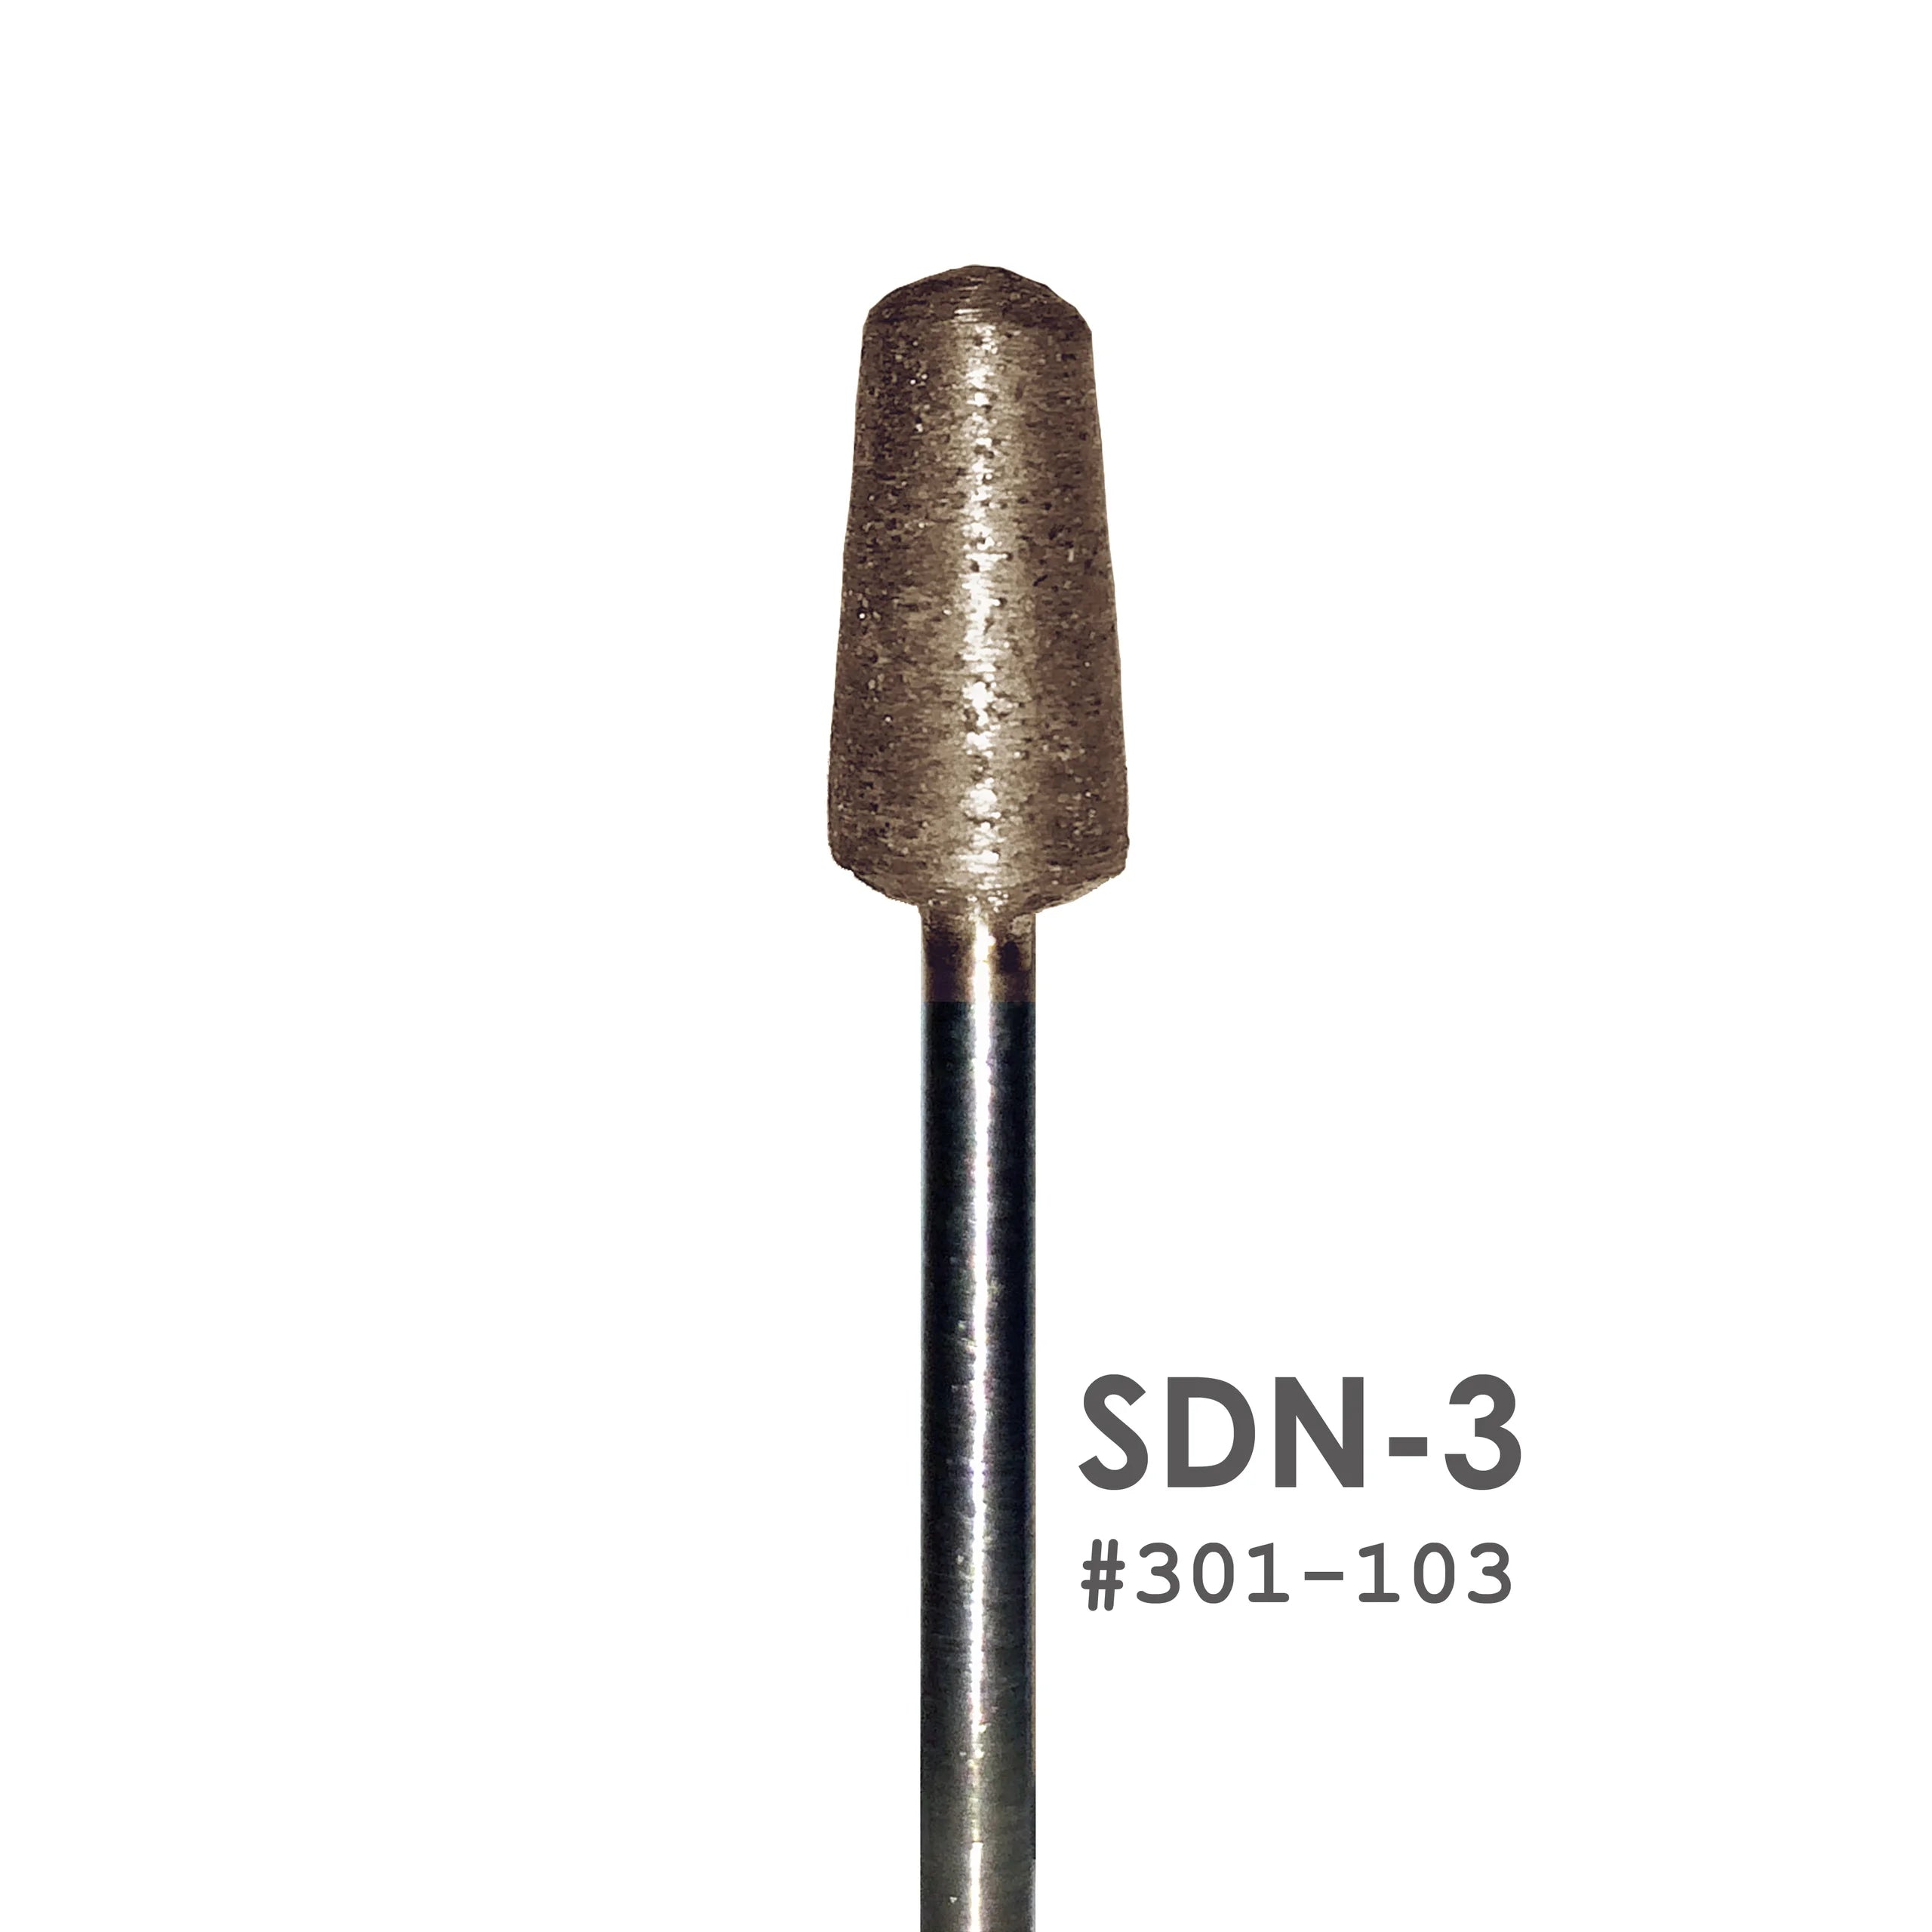 Sintered Diamond Burs SDN 3.  HP Shank 2.35mm, each.